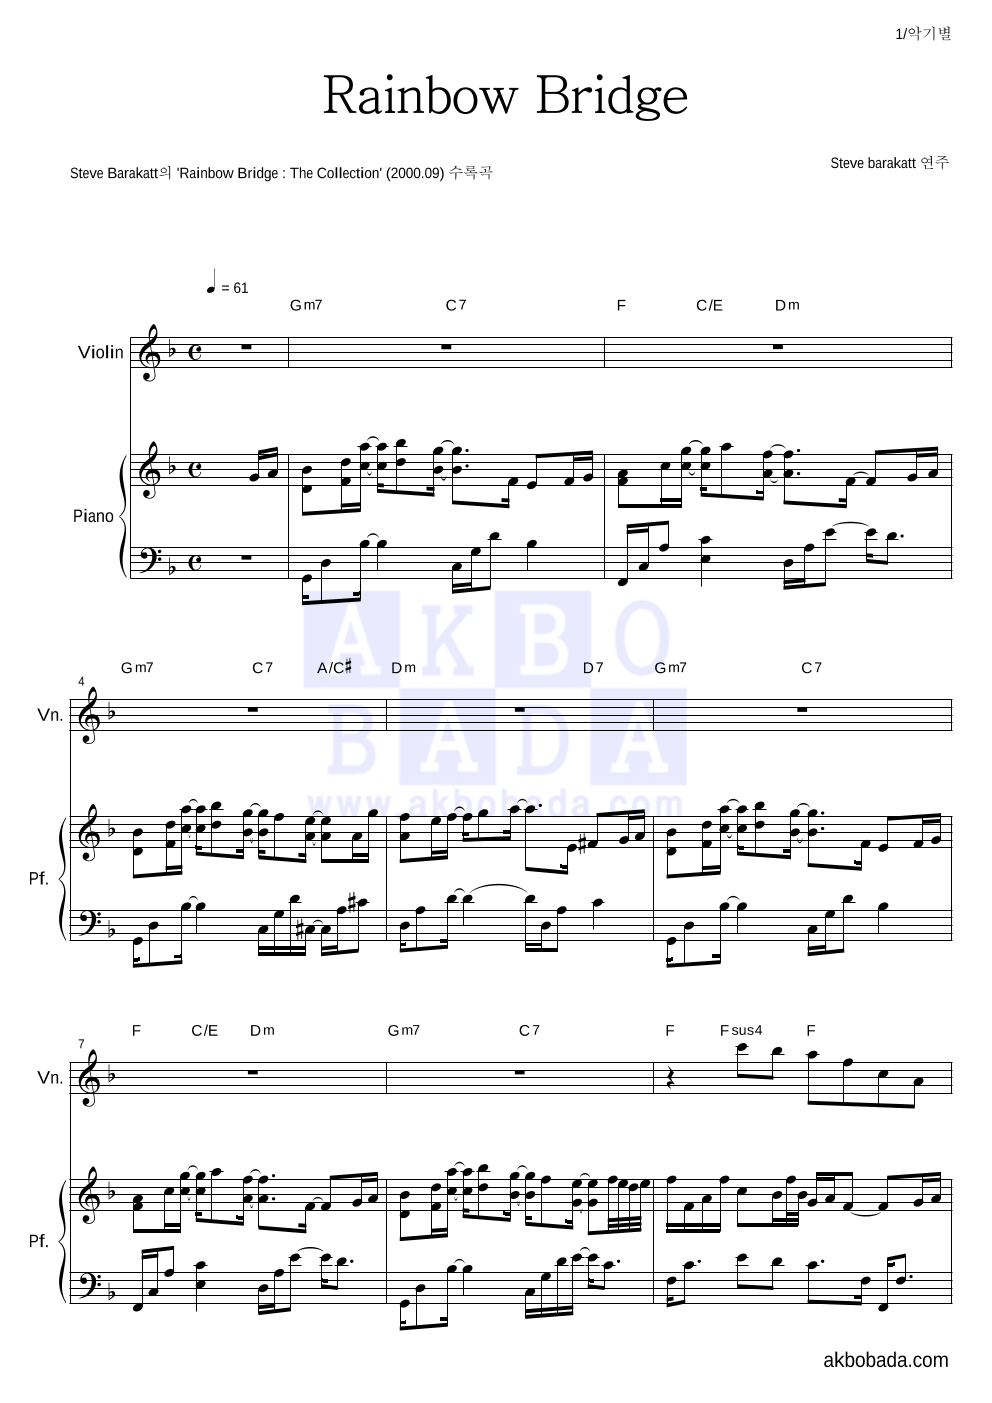 Steve Barakatt - Rainbow Bridge 바이올린&피아노 악보 